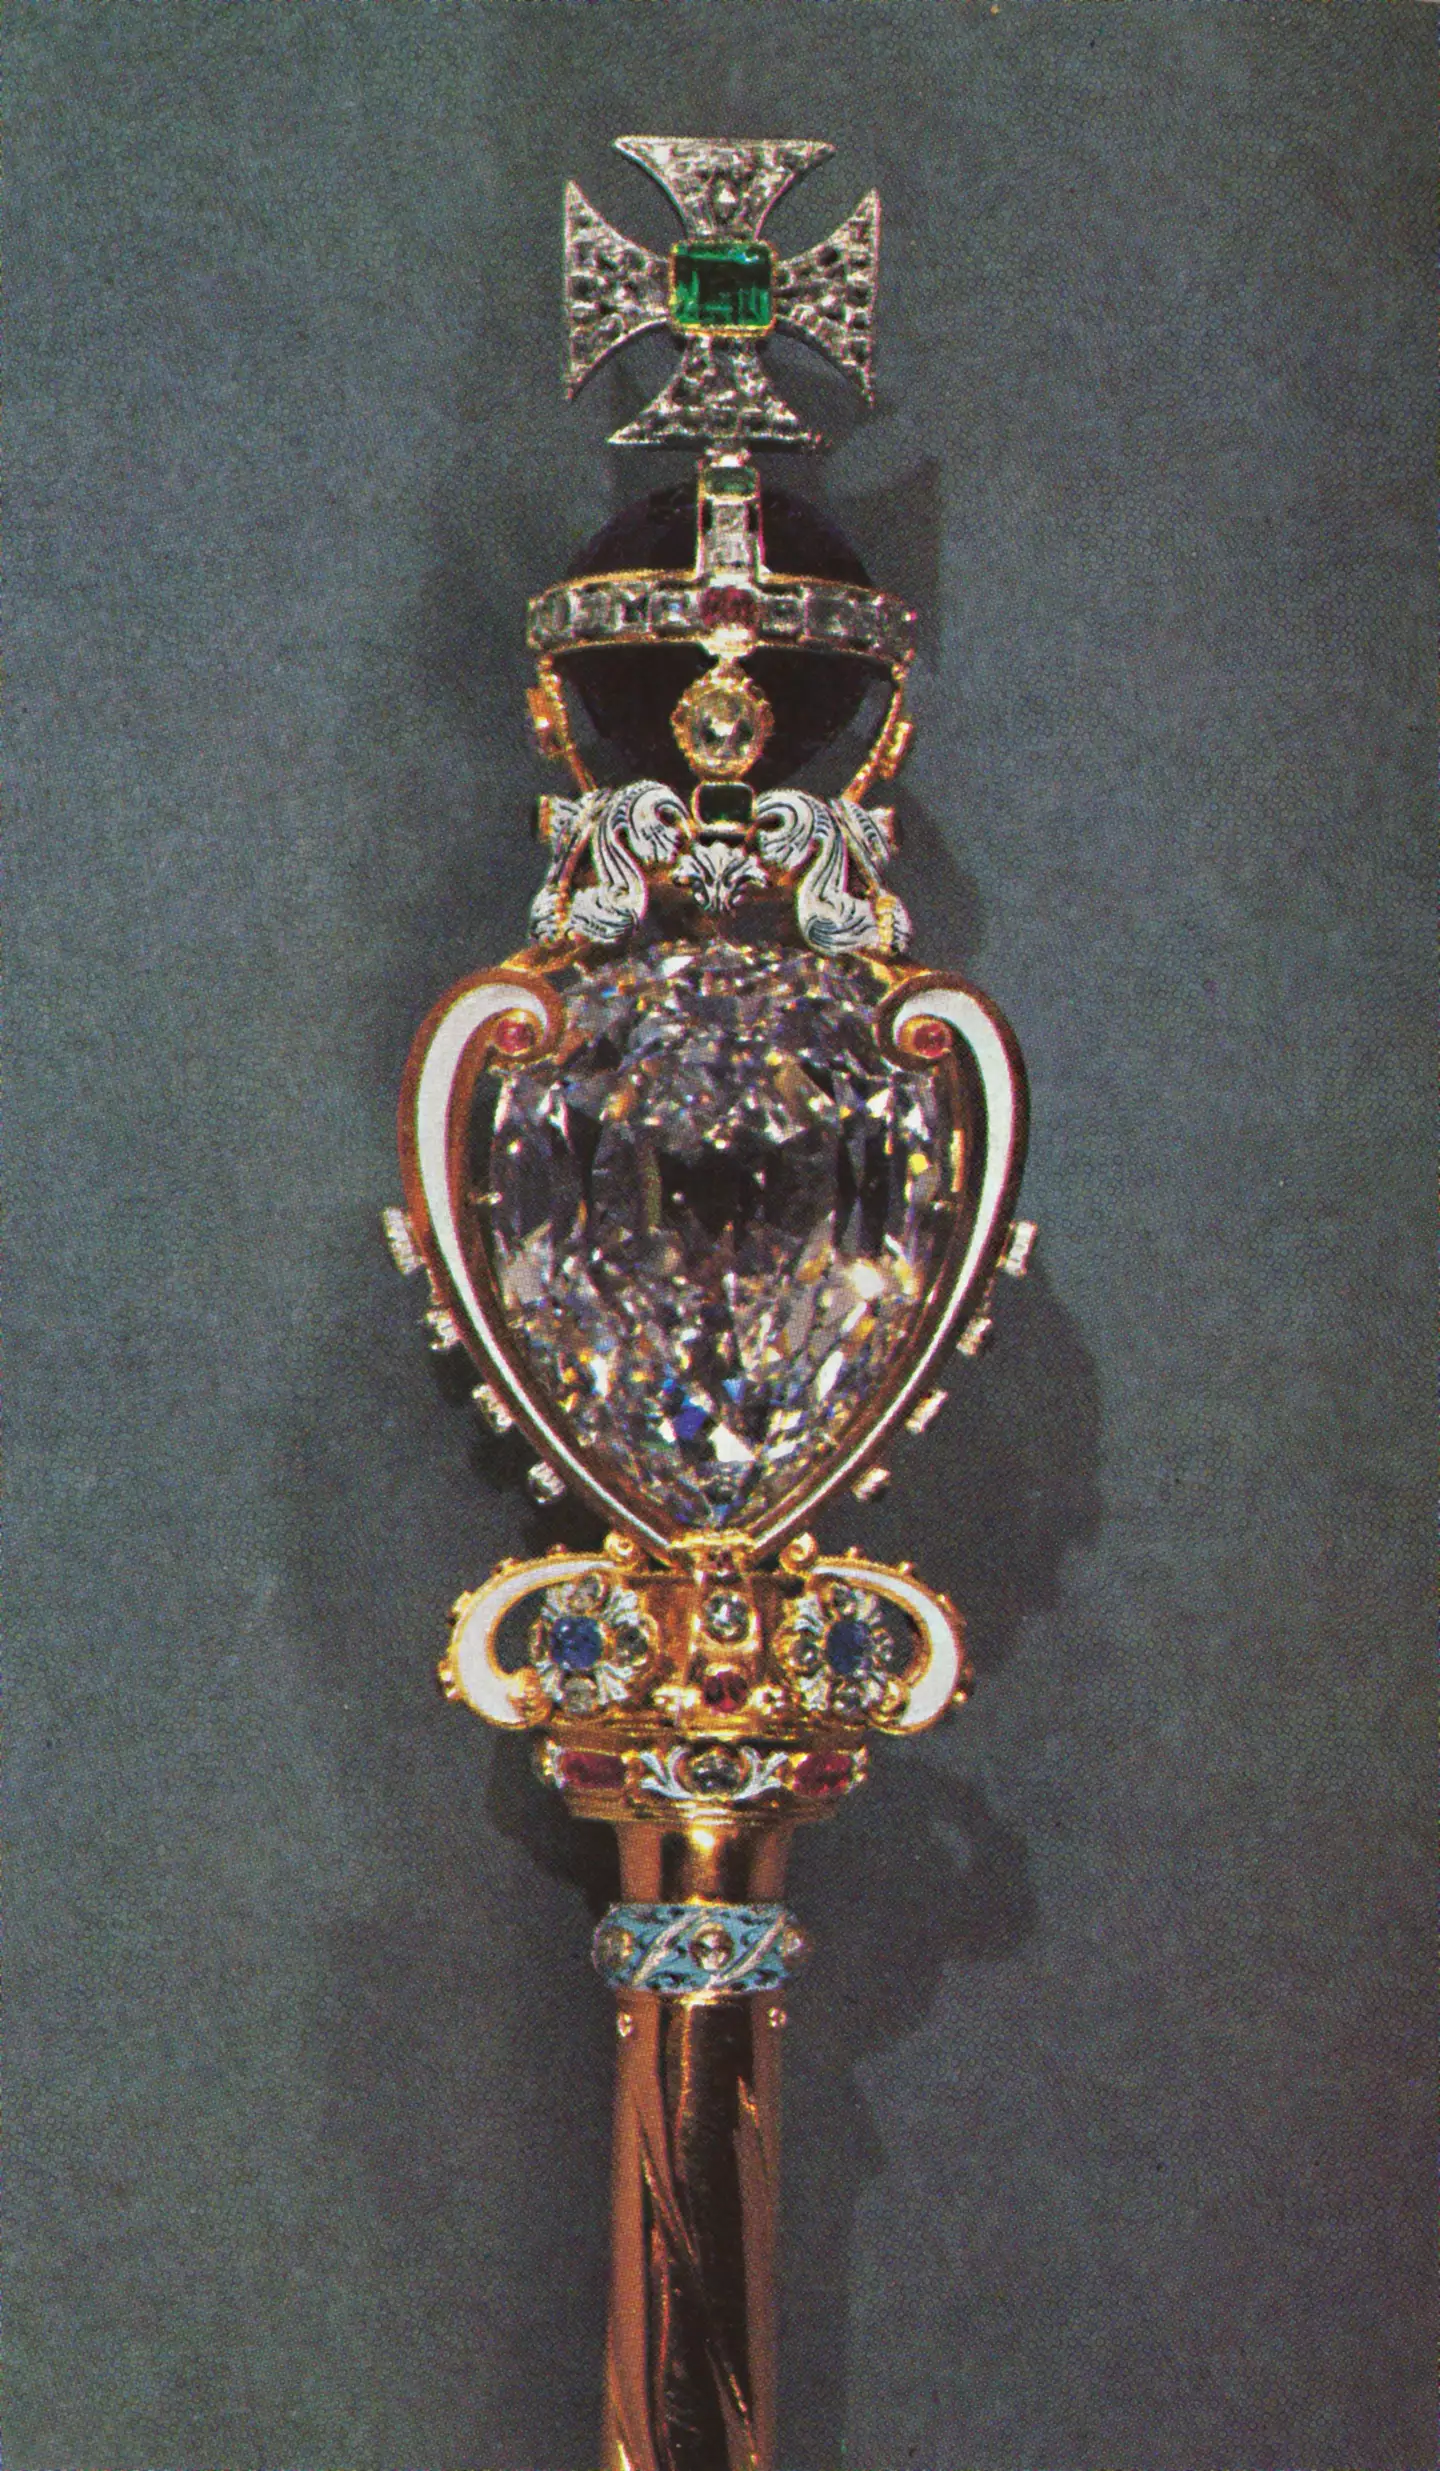 The jewel was originally discovered near Pretoria,  South Africa, in 1905.